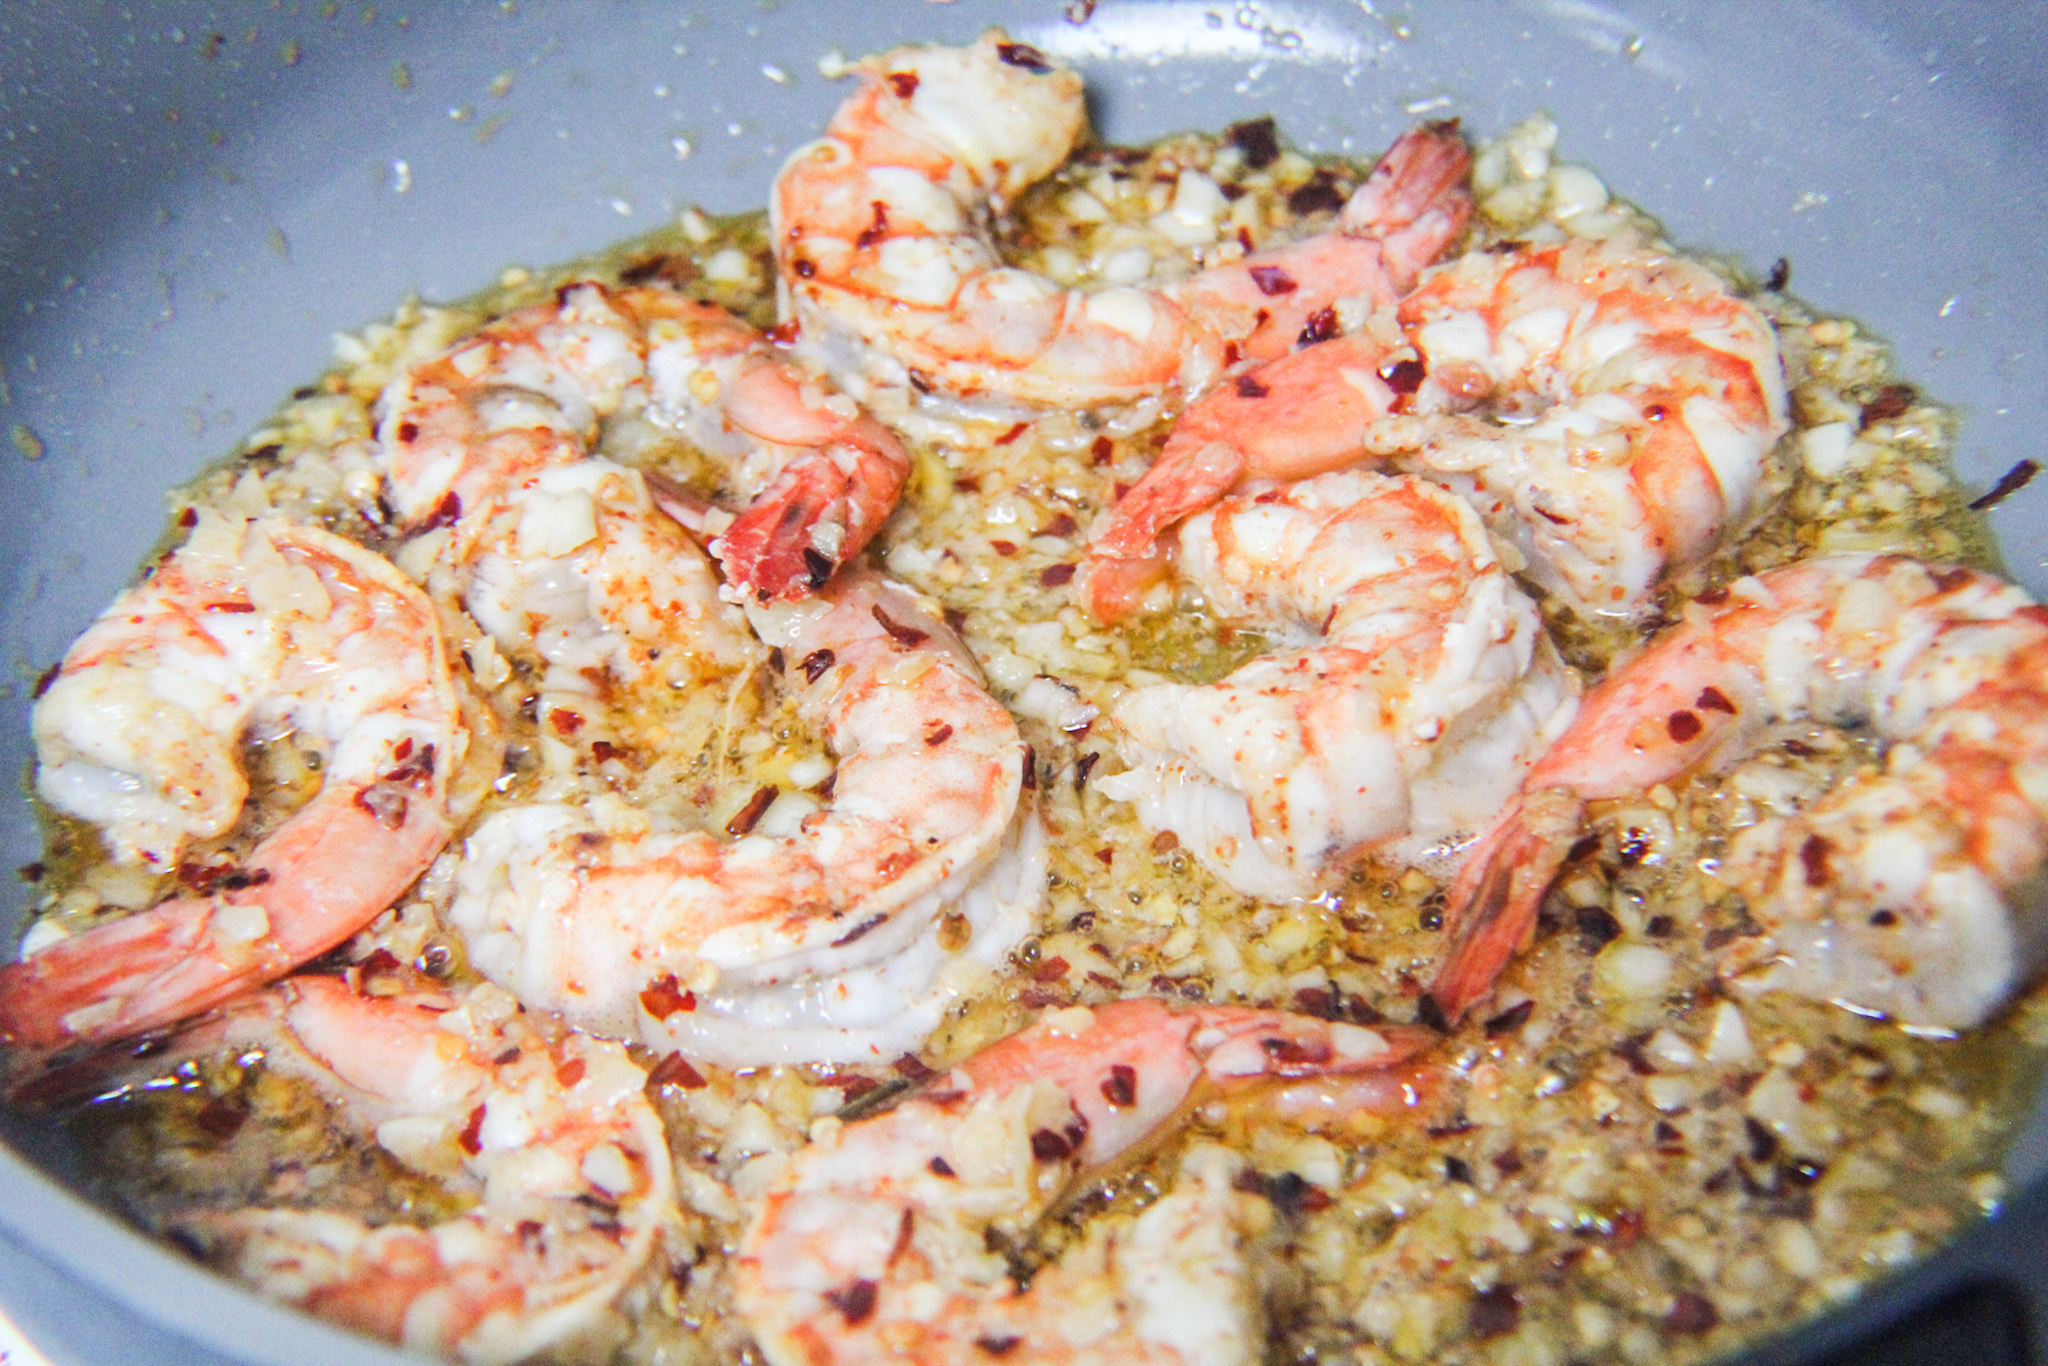 shrimp cooking in garlic sauce